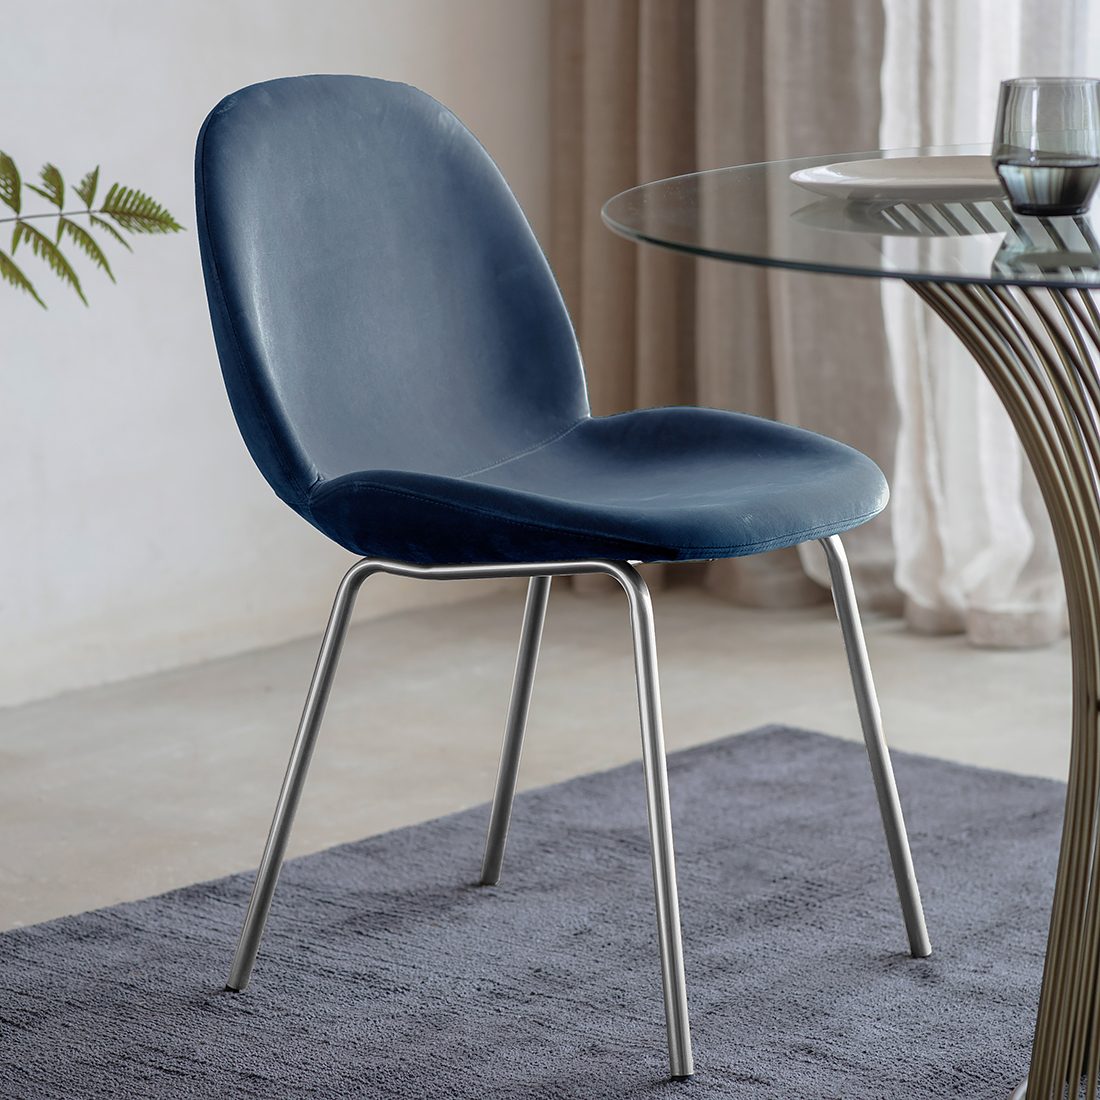 Sia Midnight Blue Velvet Dining Chair, Dark Blue Dining Chairs With Chrome Legs